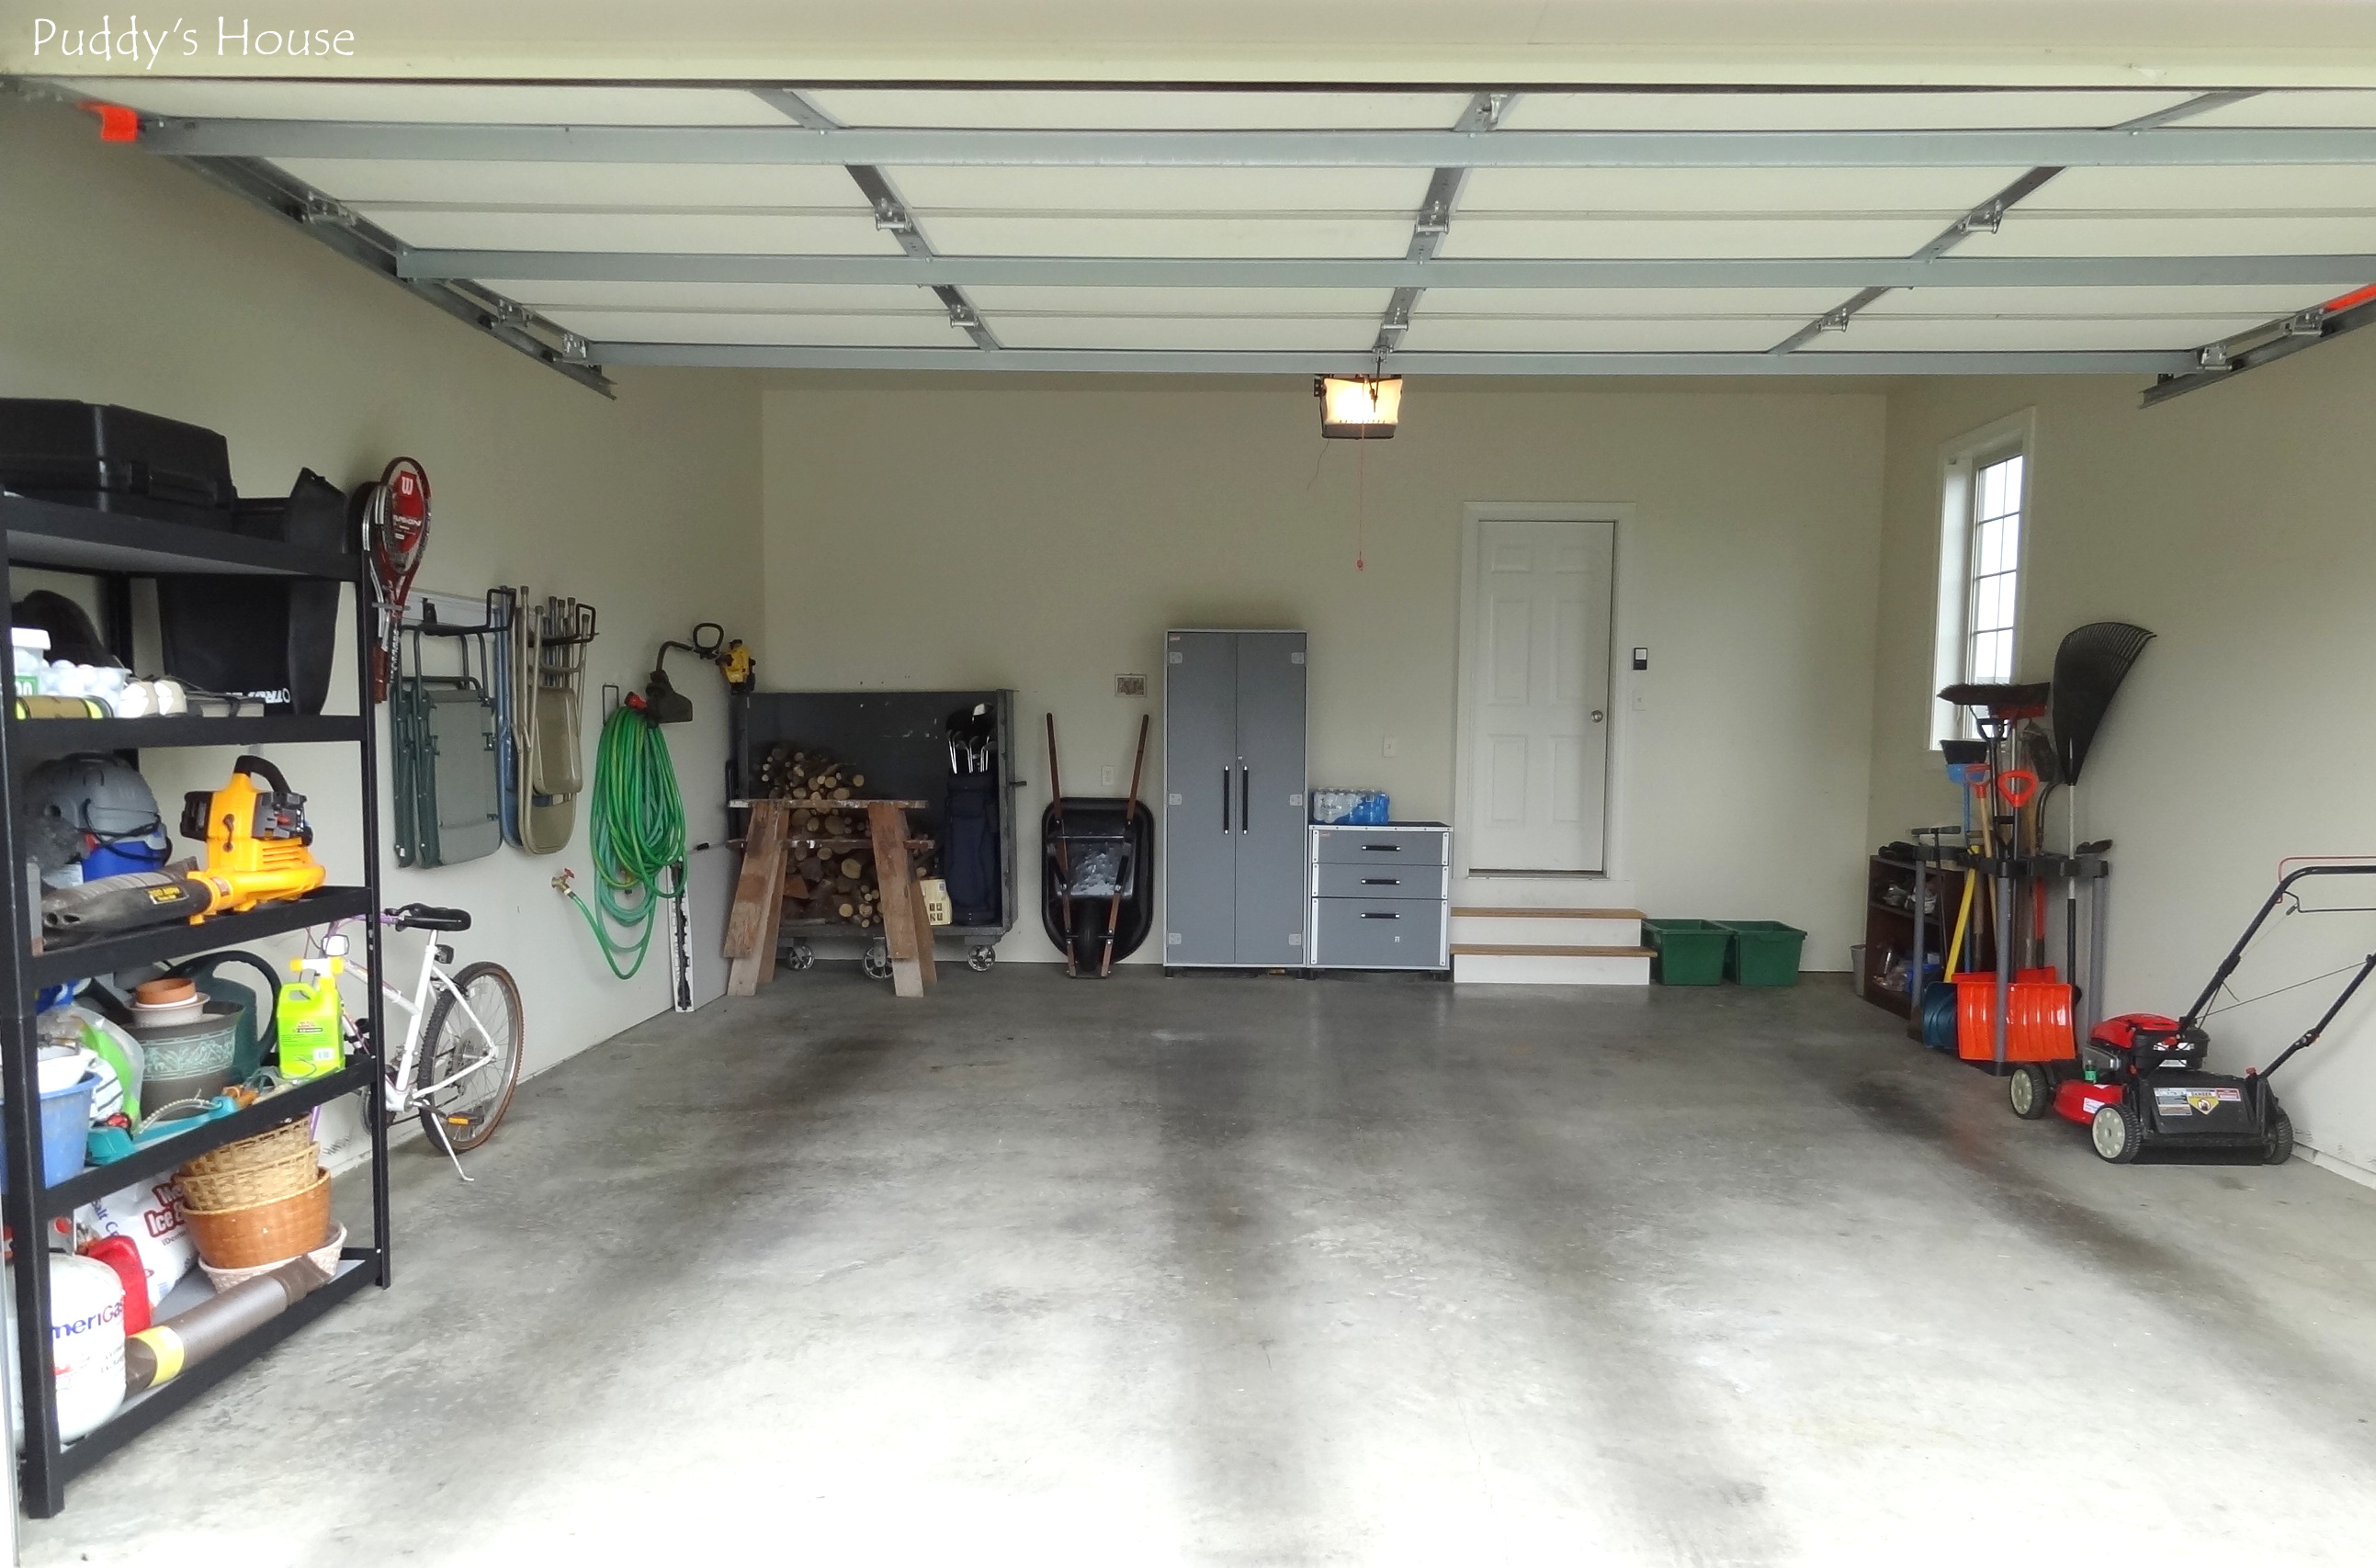 organizing a garage on a budget photo - 1